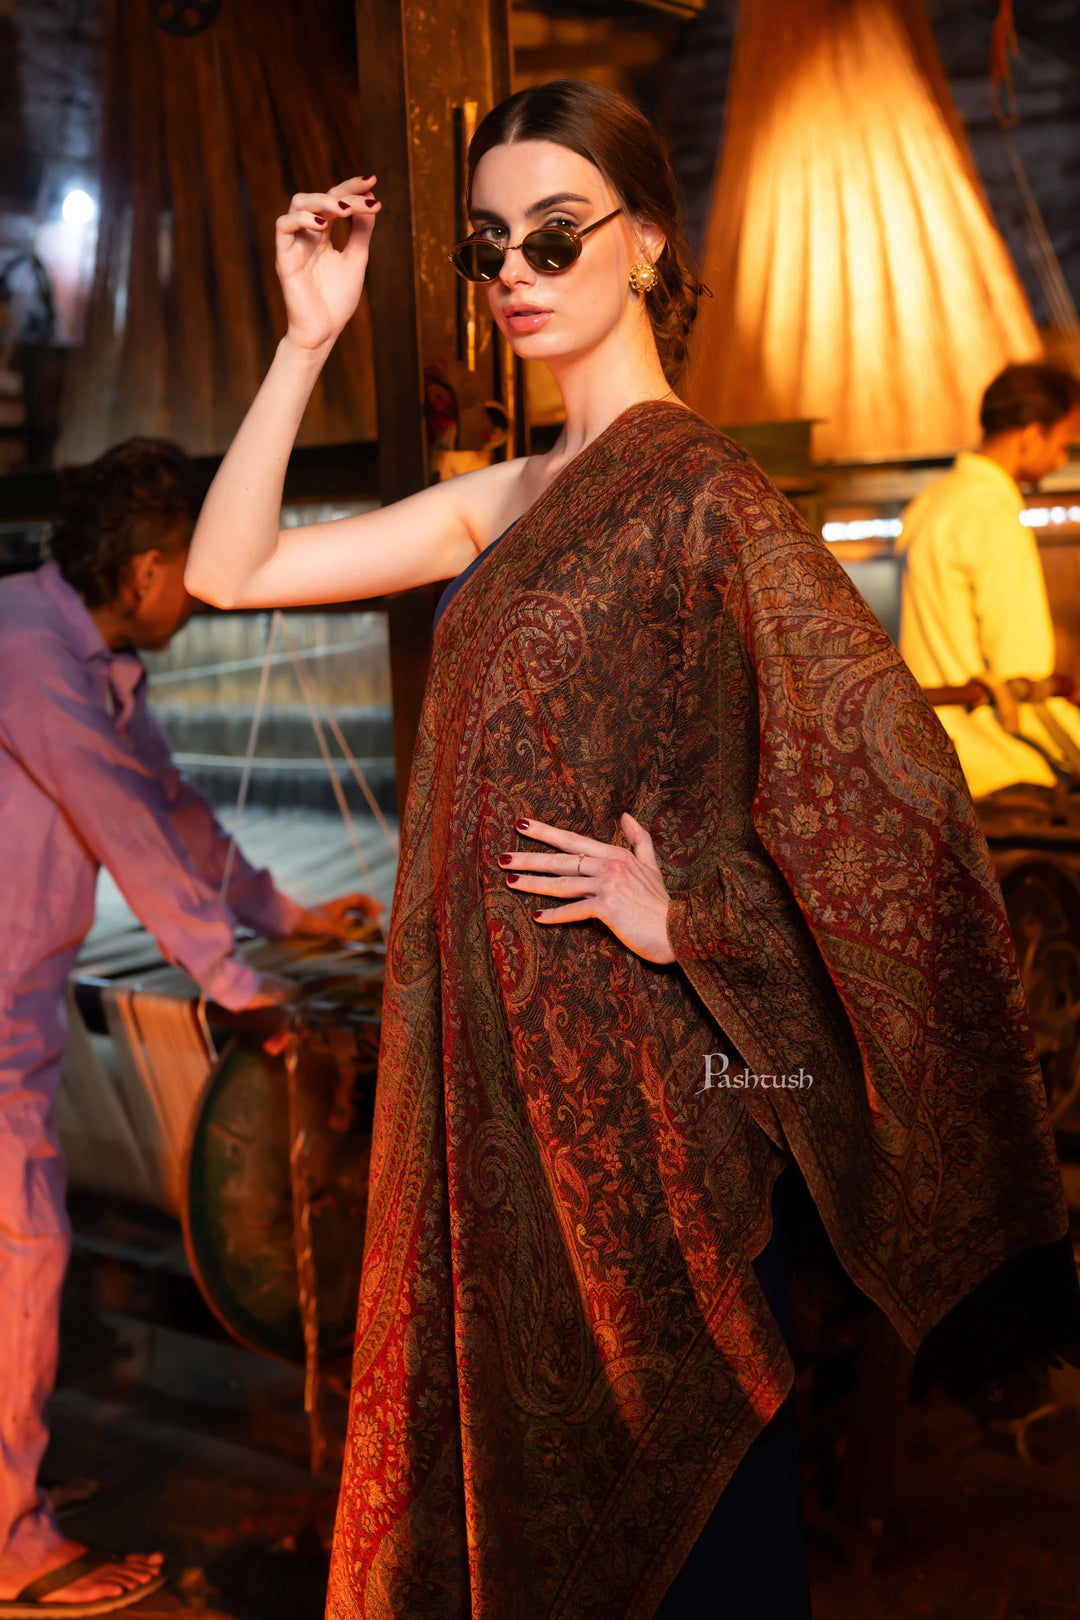 Pashtush India Womens Stoles Pashtush Womens Extra Fine Wool Stole, Ultra Soft Fine Wool Design, Black